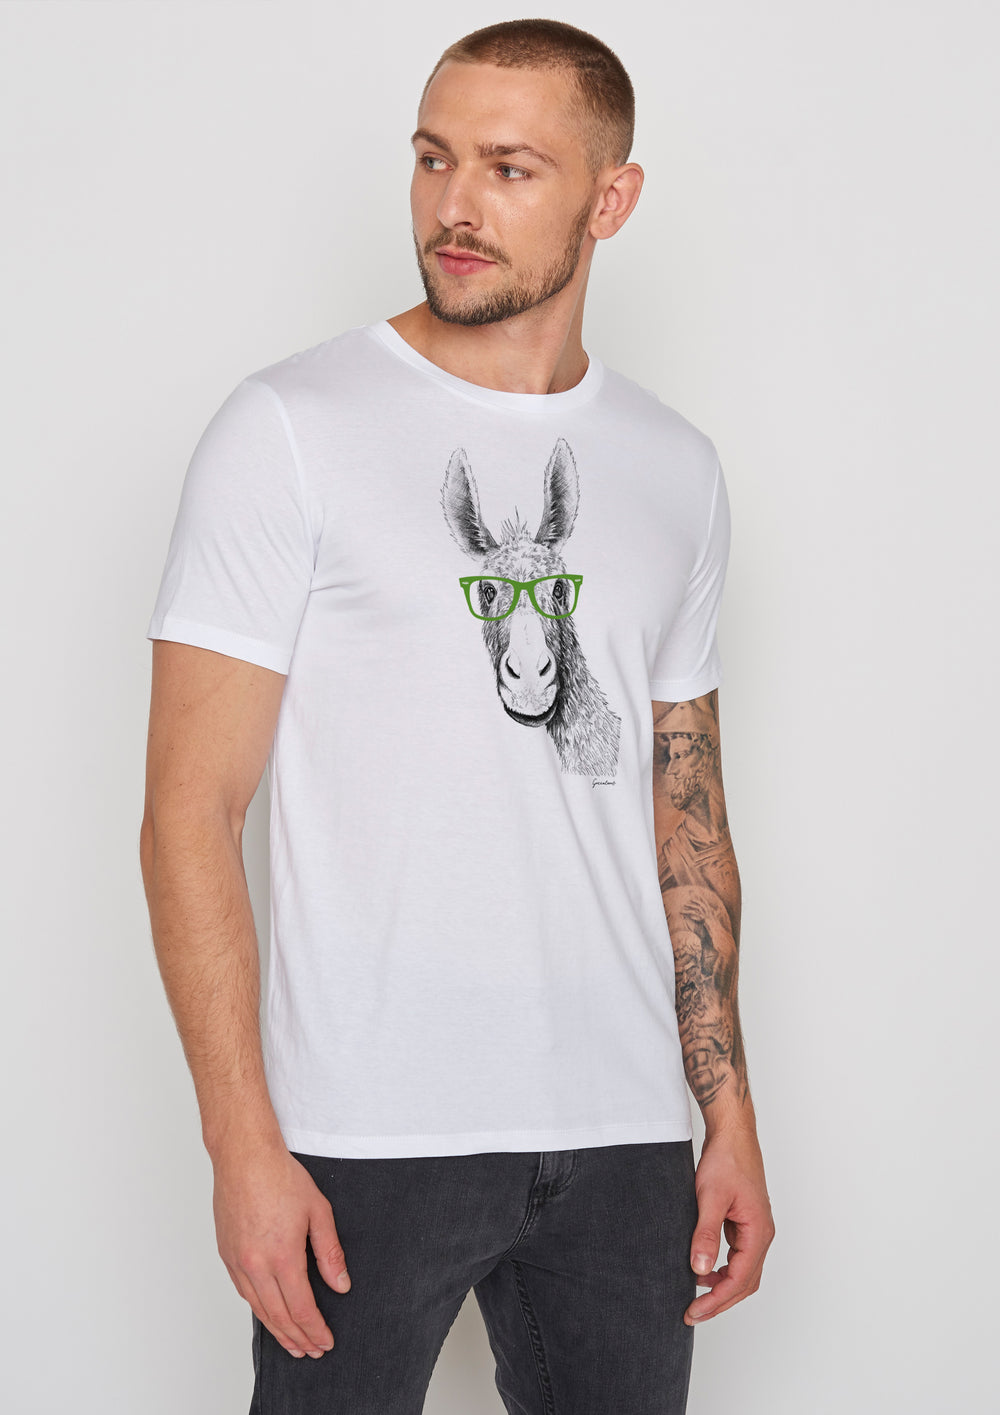 Greenbomb T-Shirt Guide - Animal Donkey